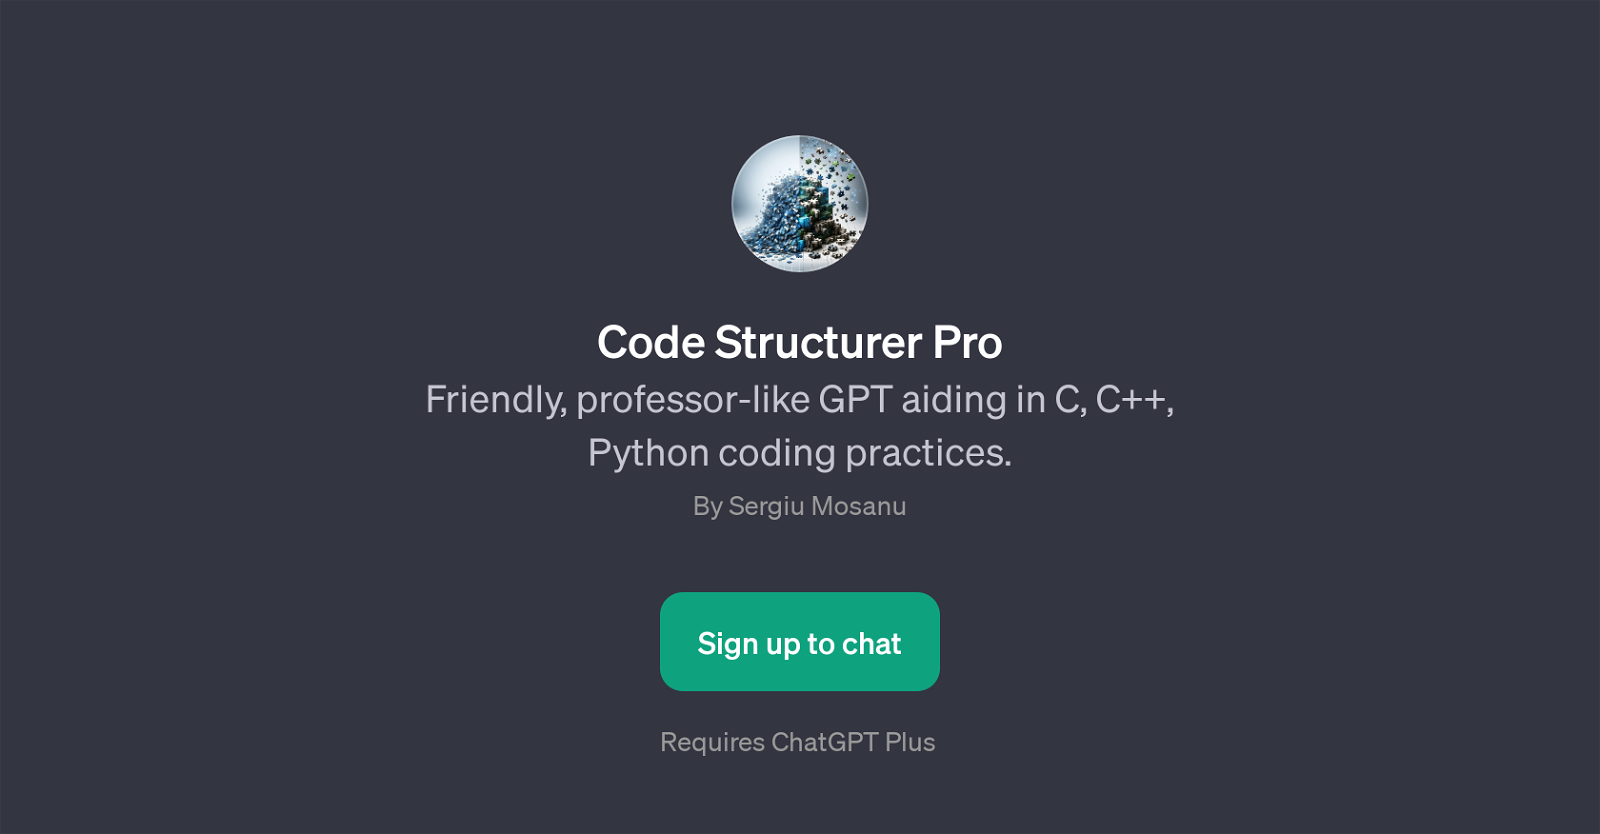 Code Structurer Pro website